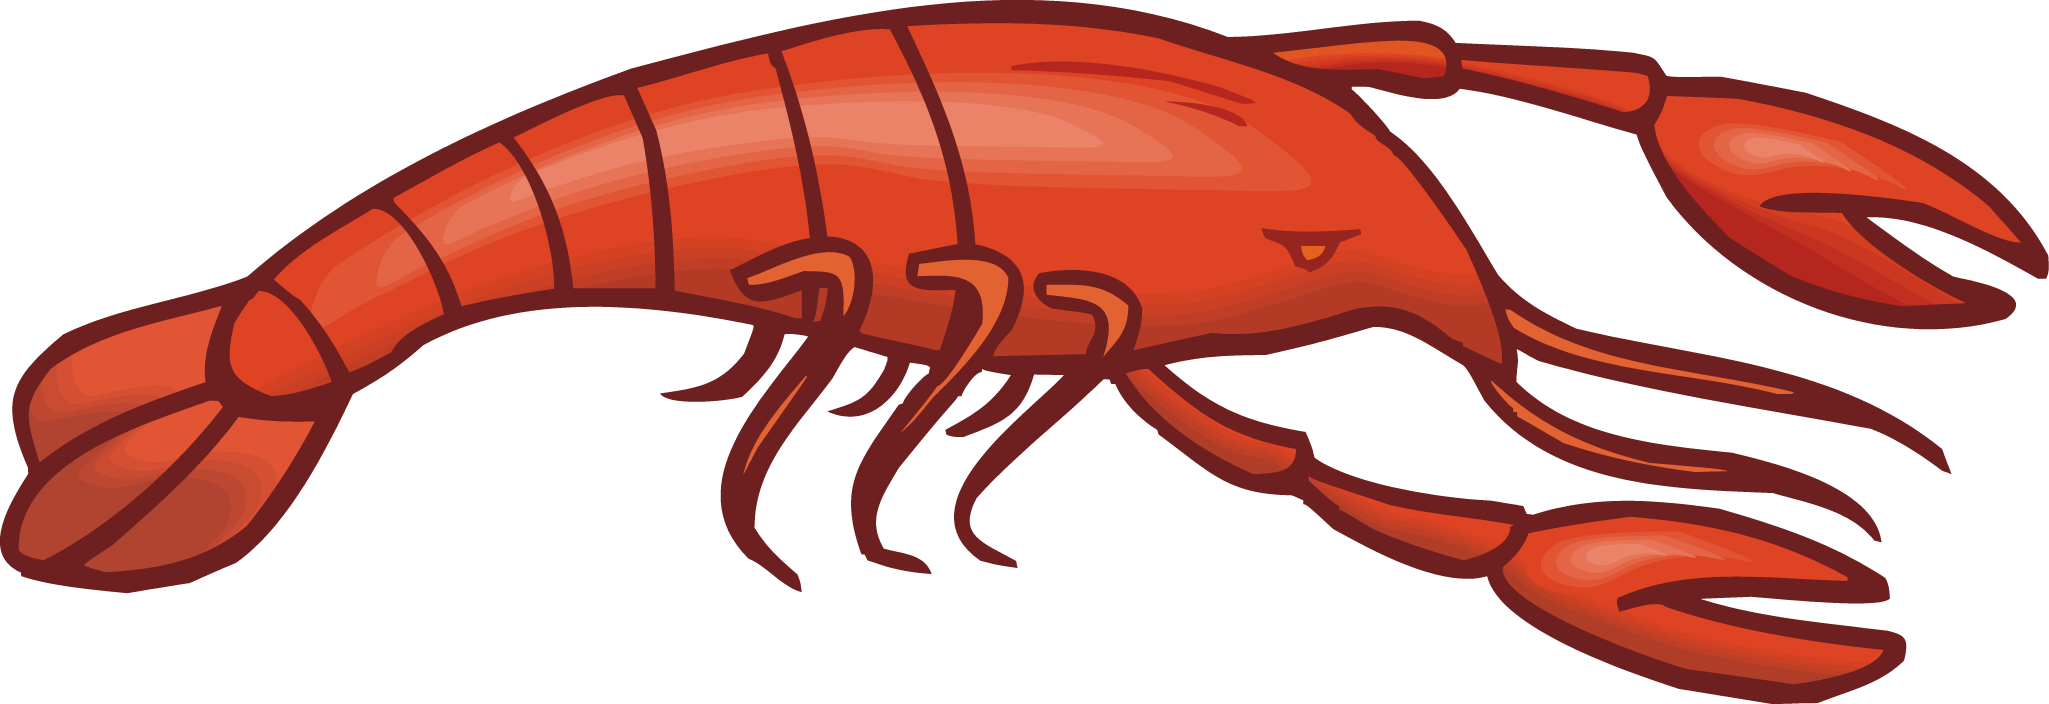 Crayfish clip art